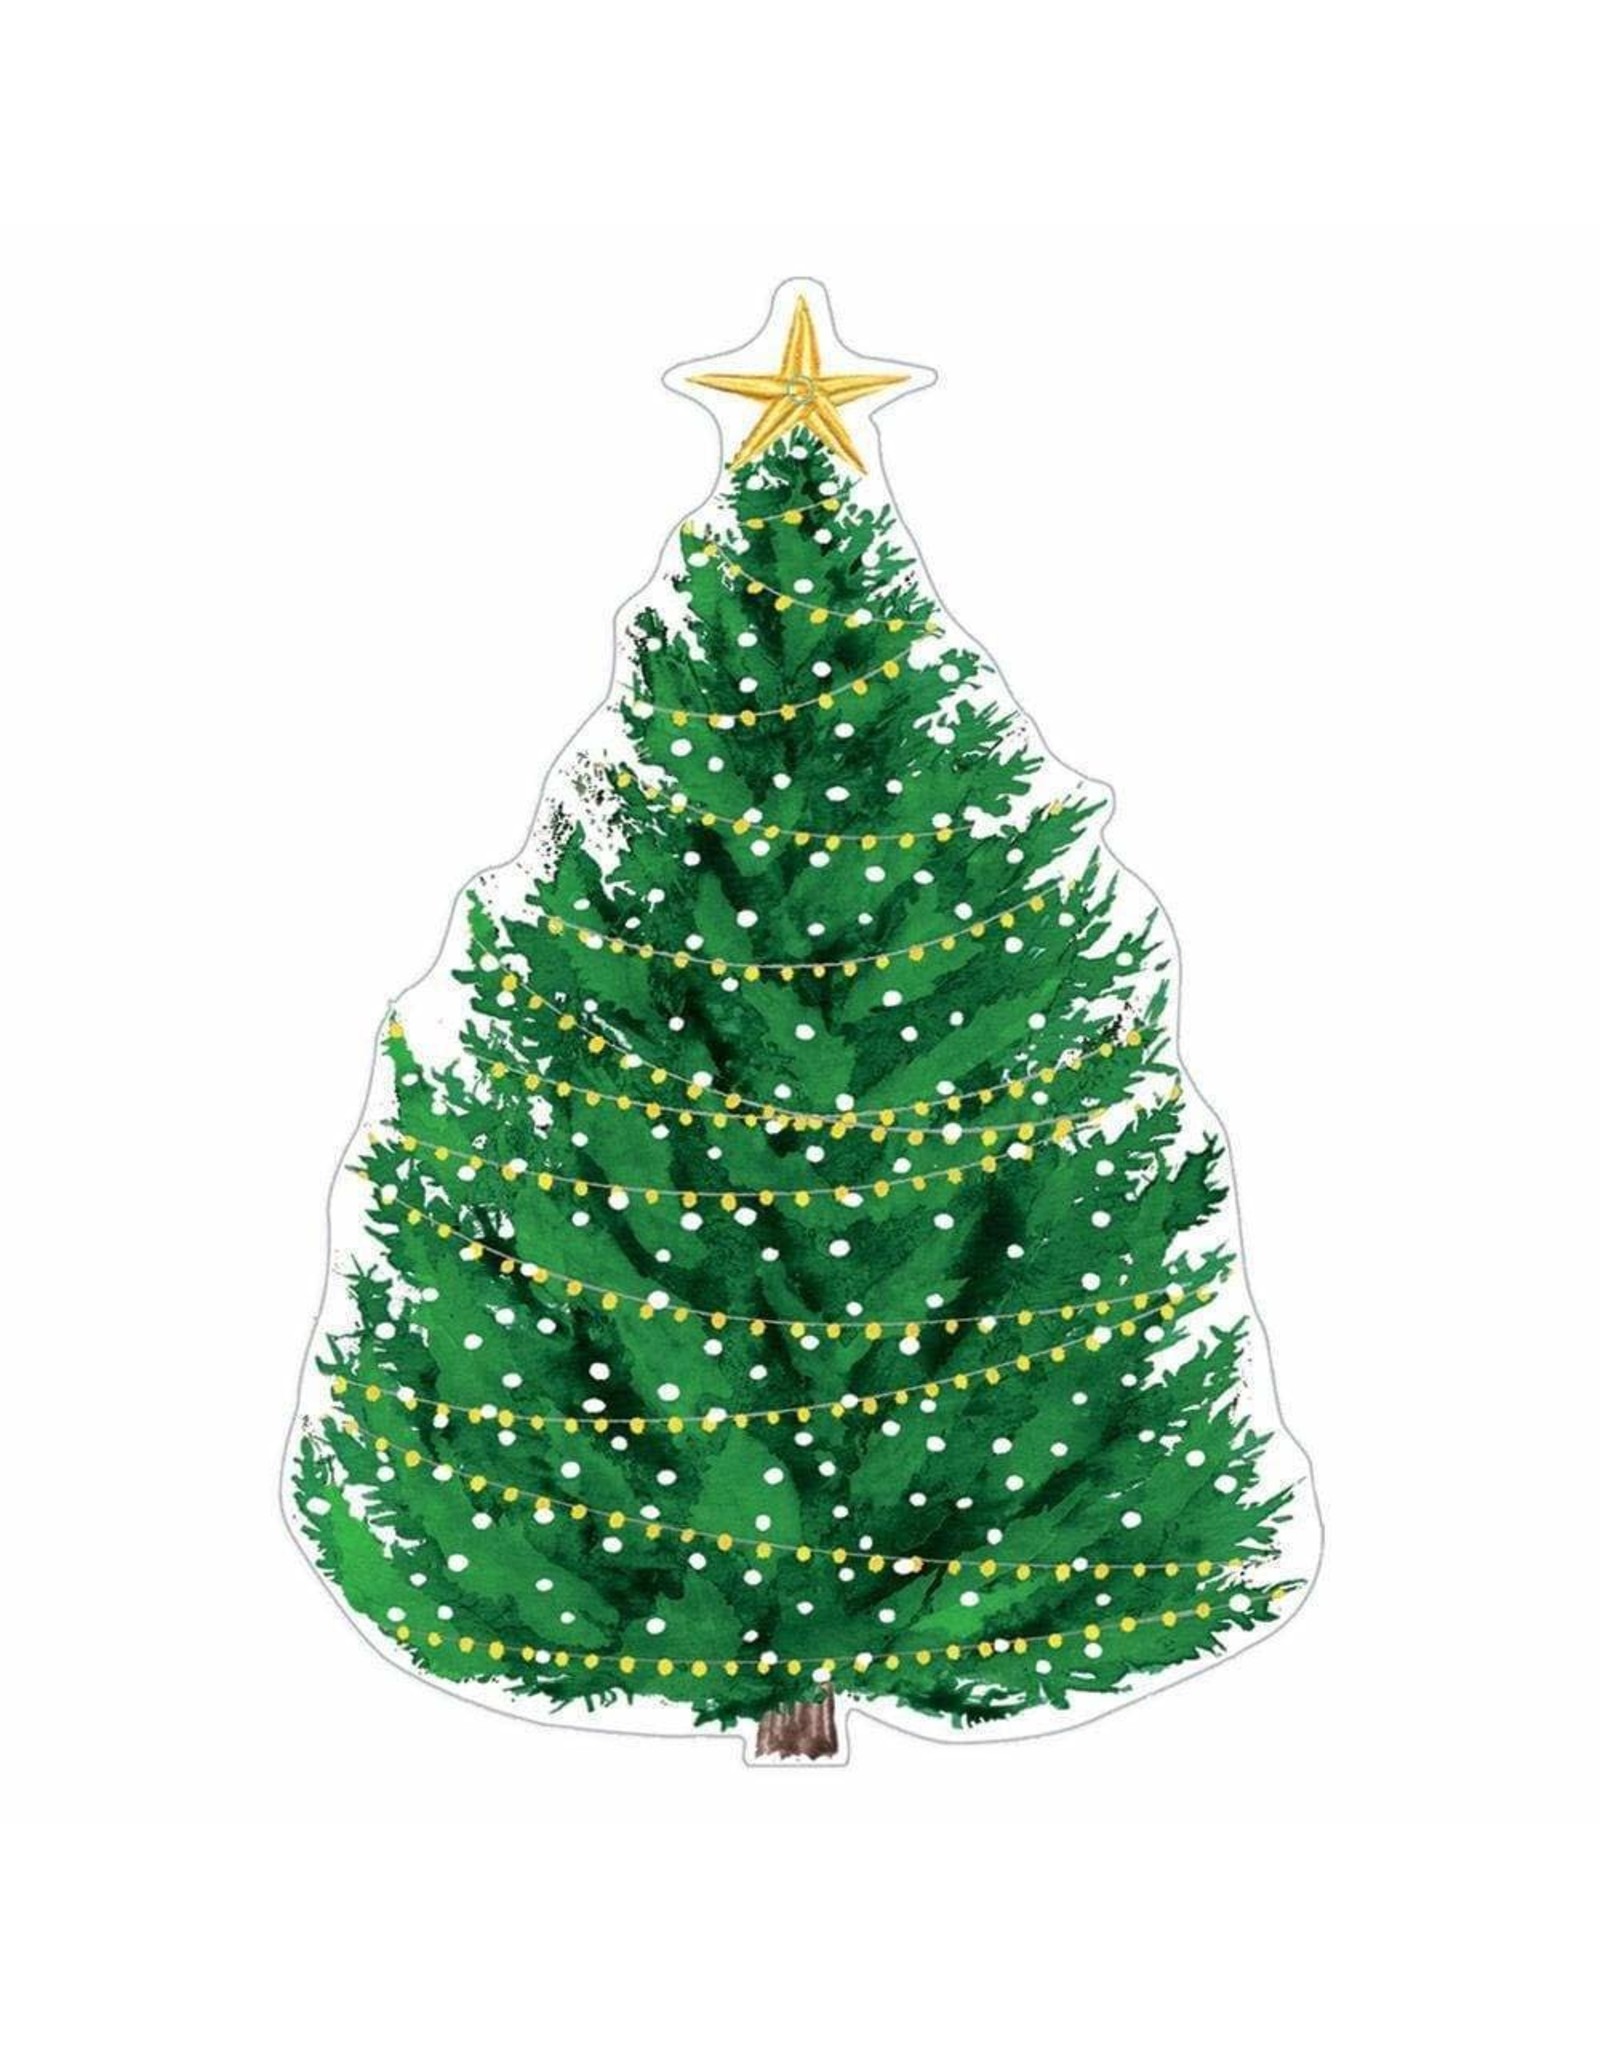 Caspari Ornament Gift Tags 4pk Die-Cut Christmas Tree W Lights